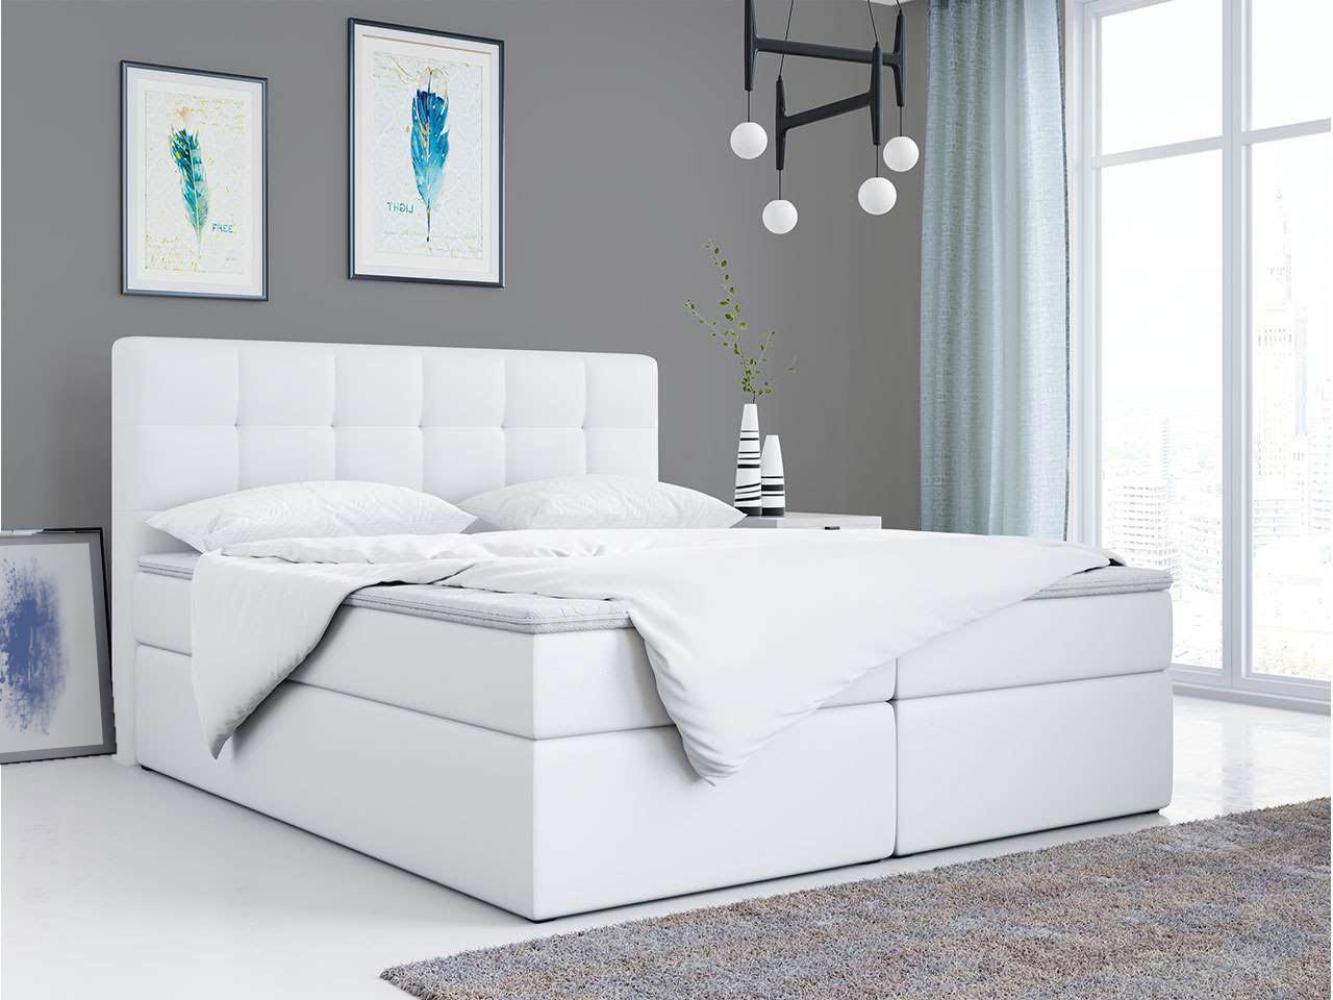 Doppelbett Polsterbett Kunstlederbett mit Bettkasten - TOP-2 - 200x200cm - Weiß Kunstleder - H3 Bild 1